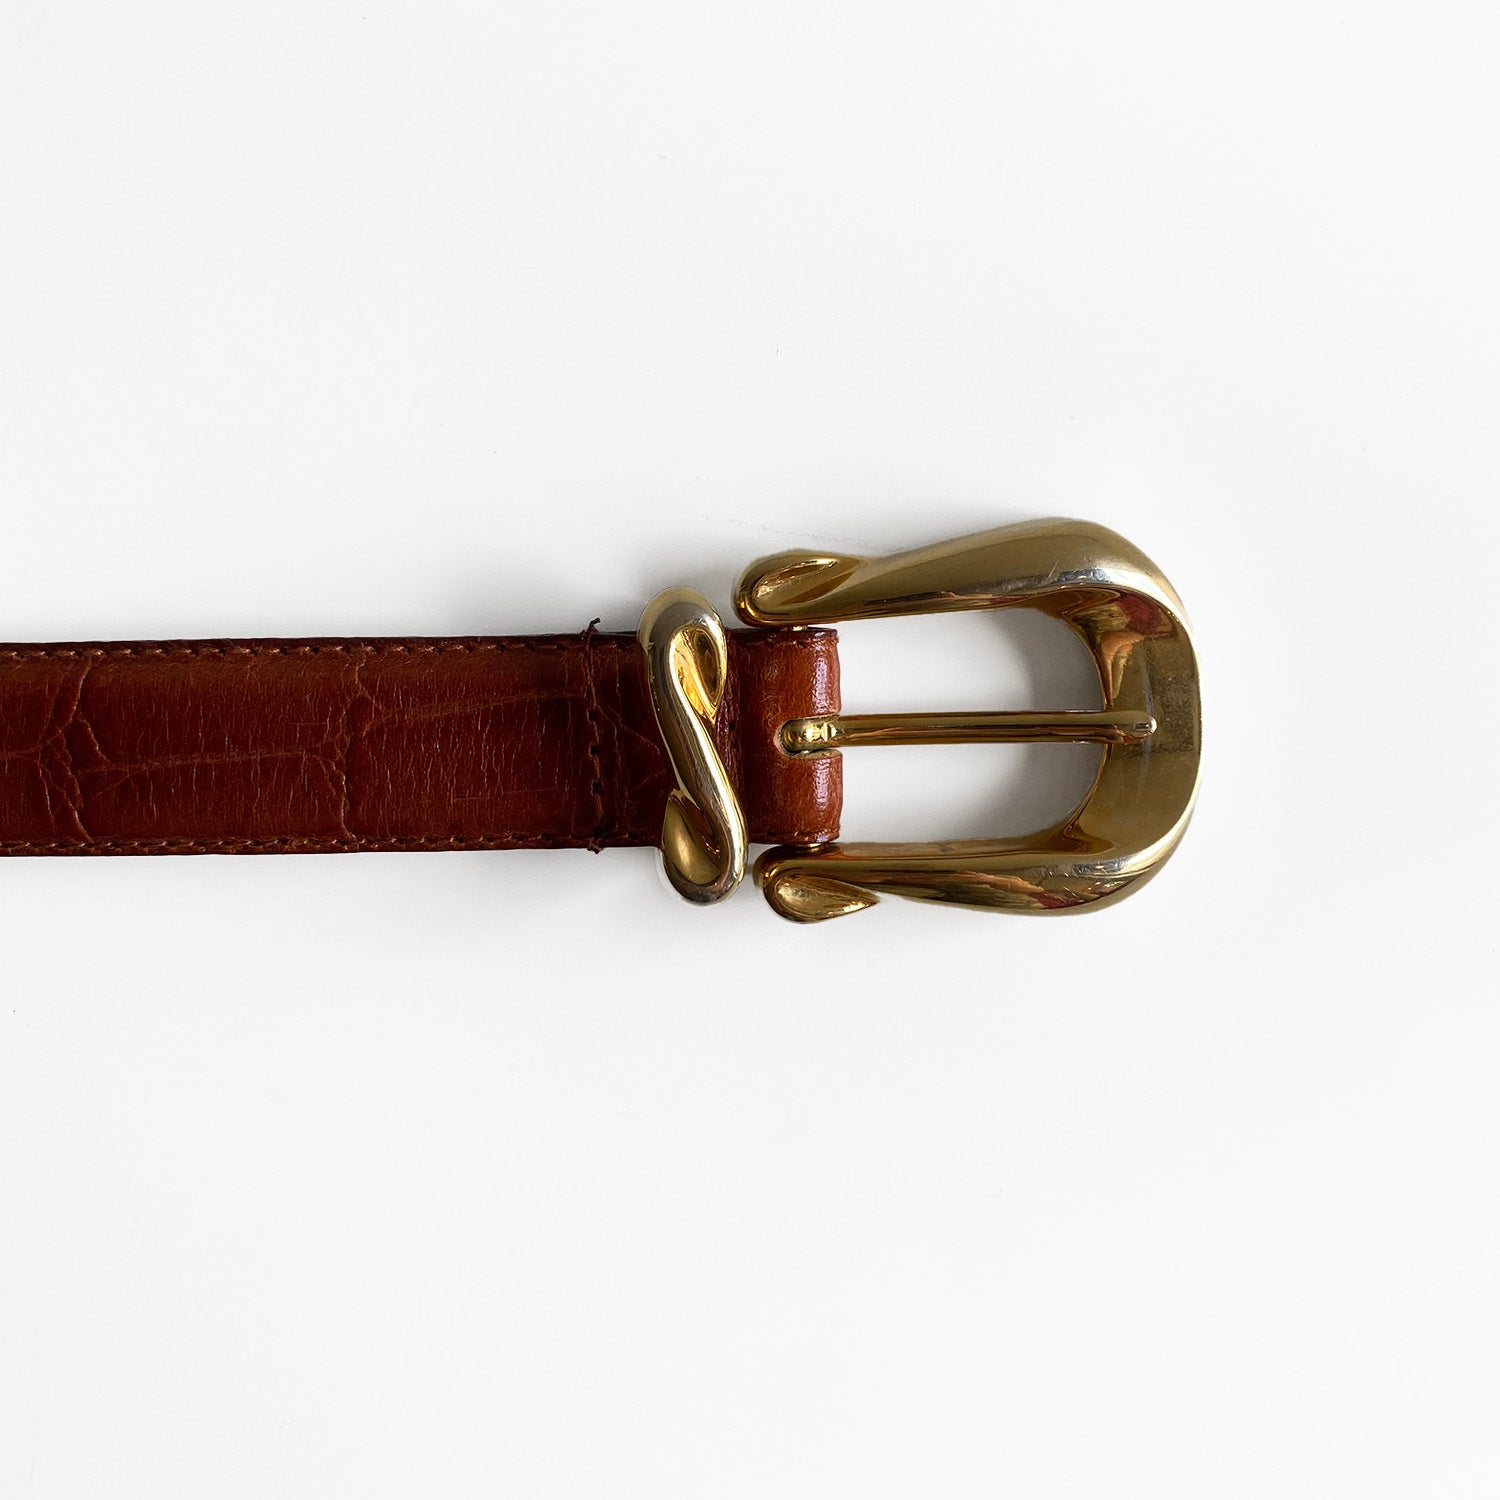 Brown Leather Embossed Belt